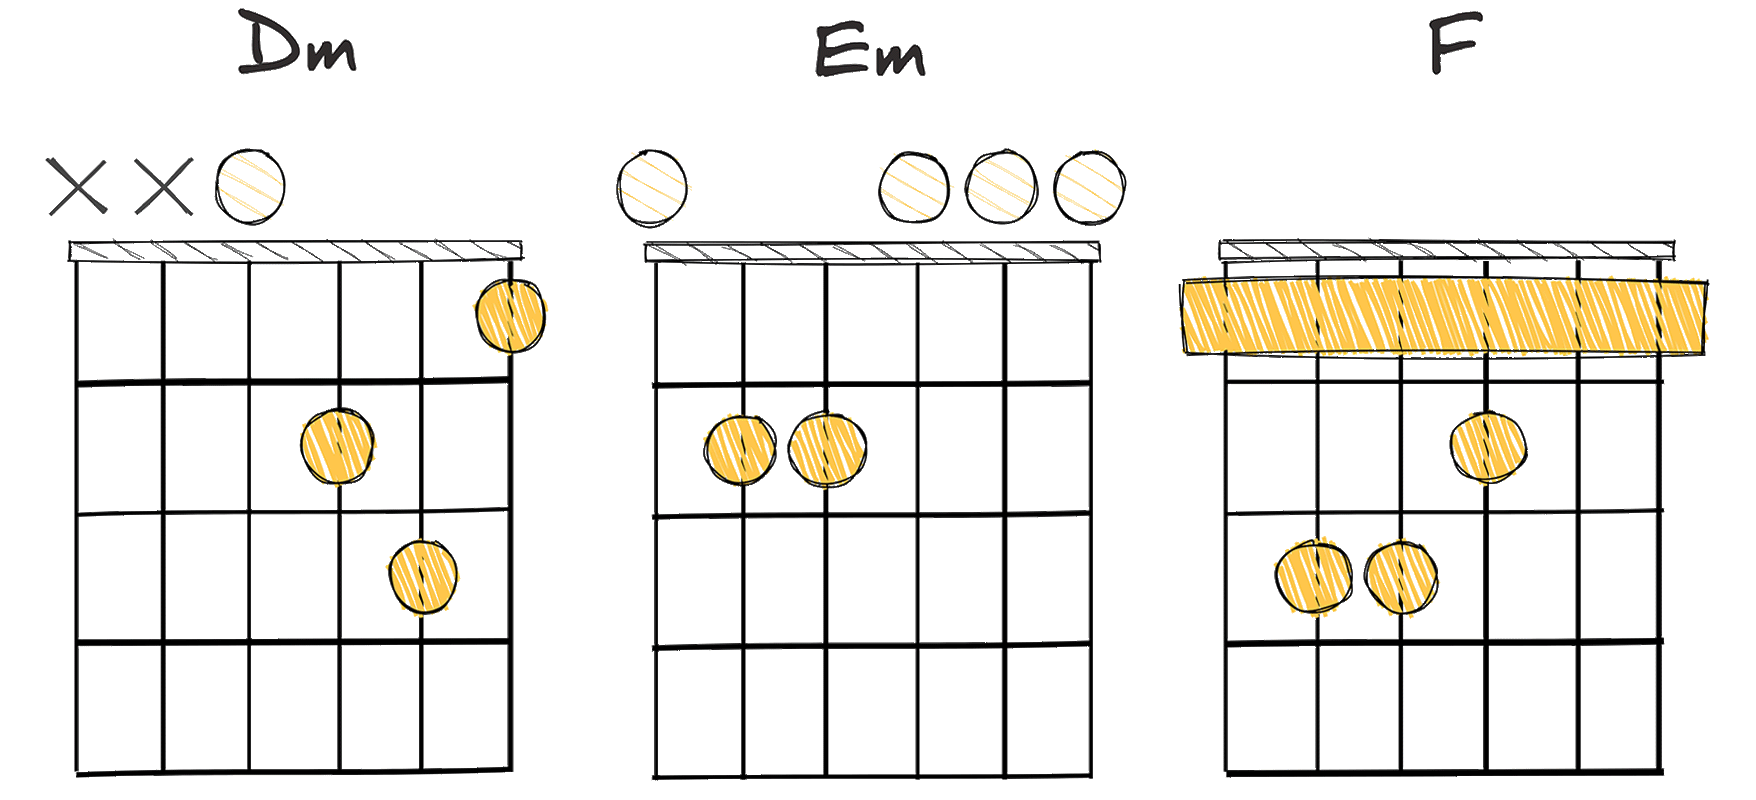 ii-iii-IV (2-3-4) chords diagram